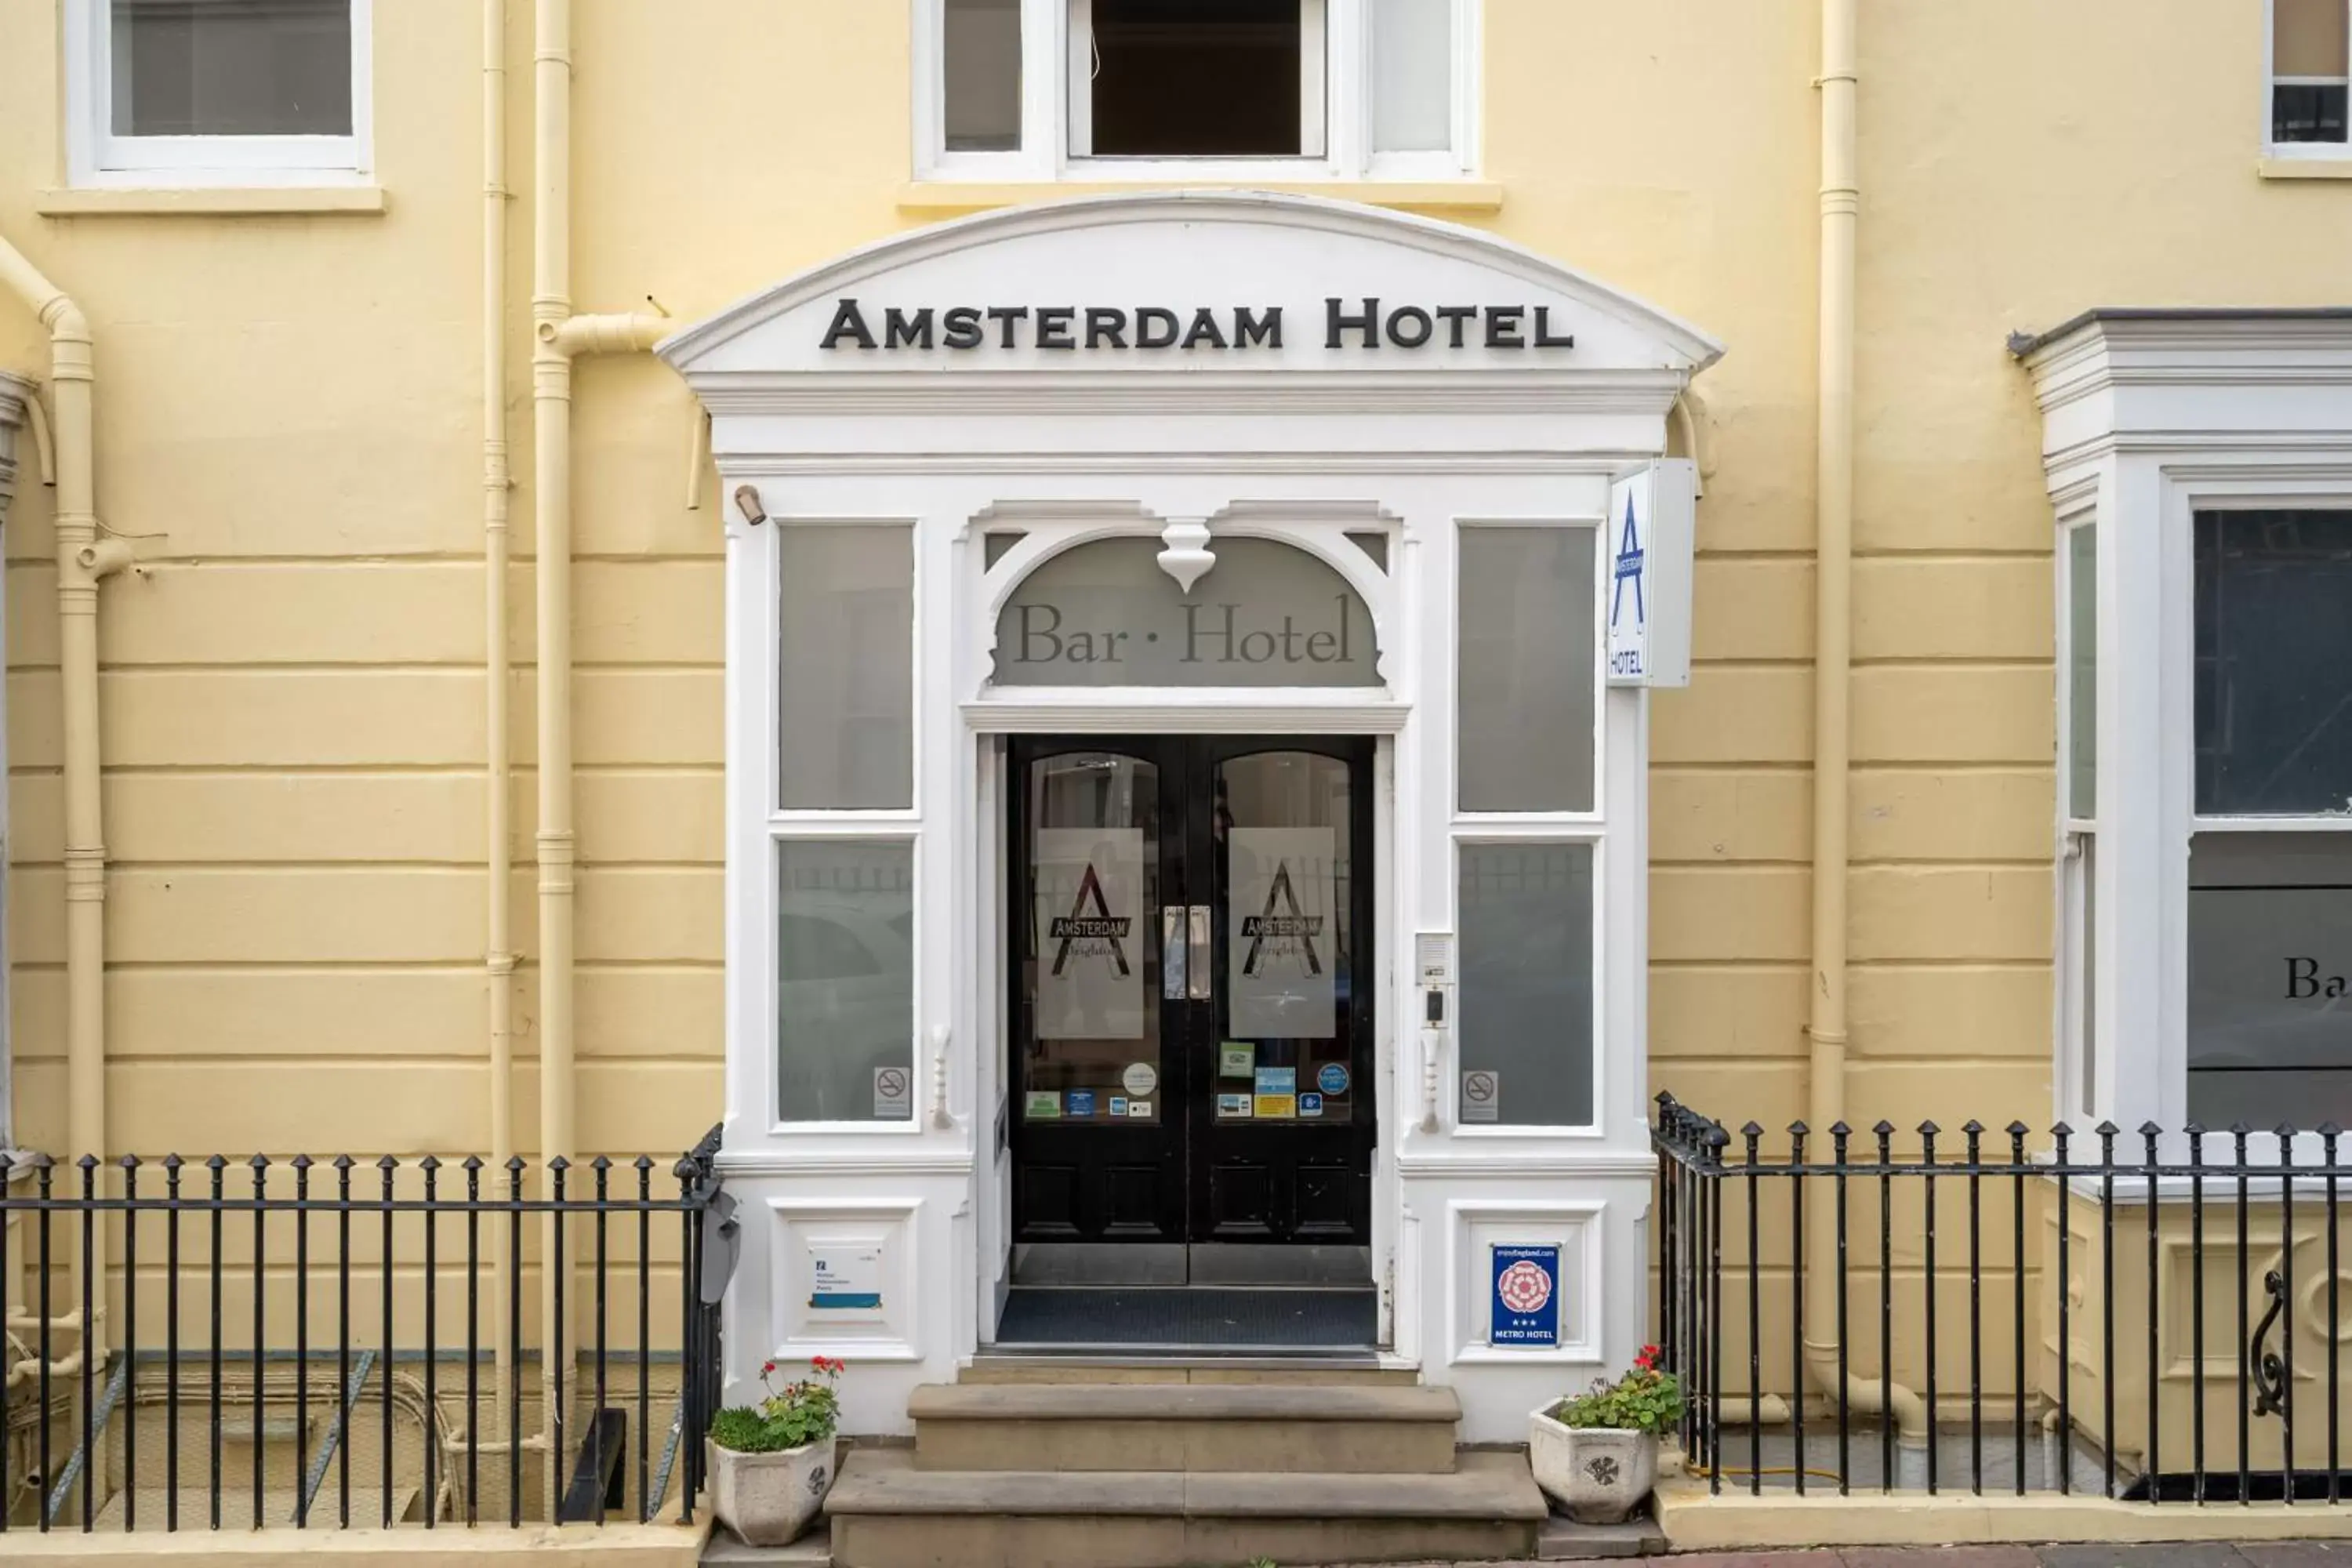 Facade/entrance in Amsterdam Hotel Brighton Seafront